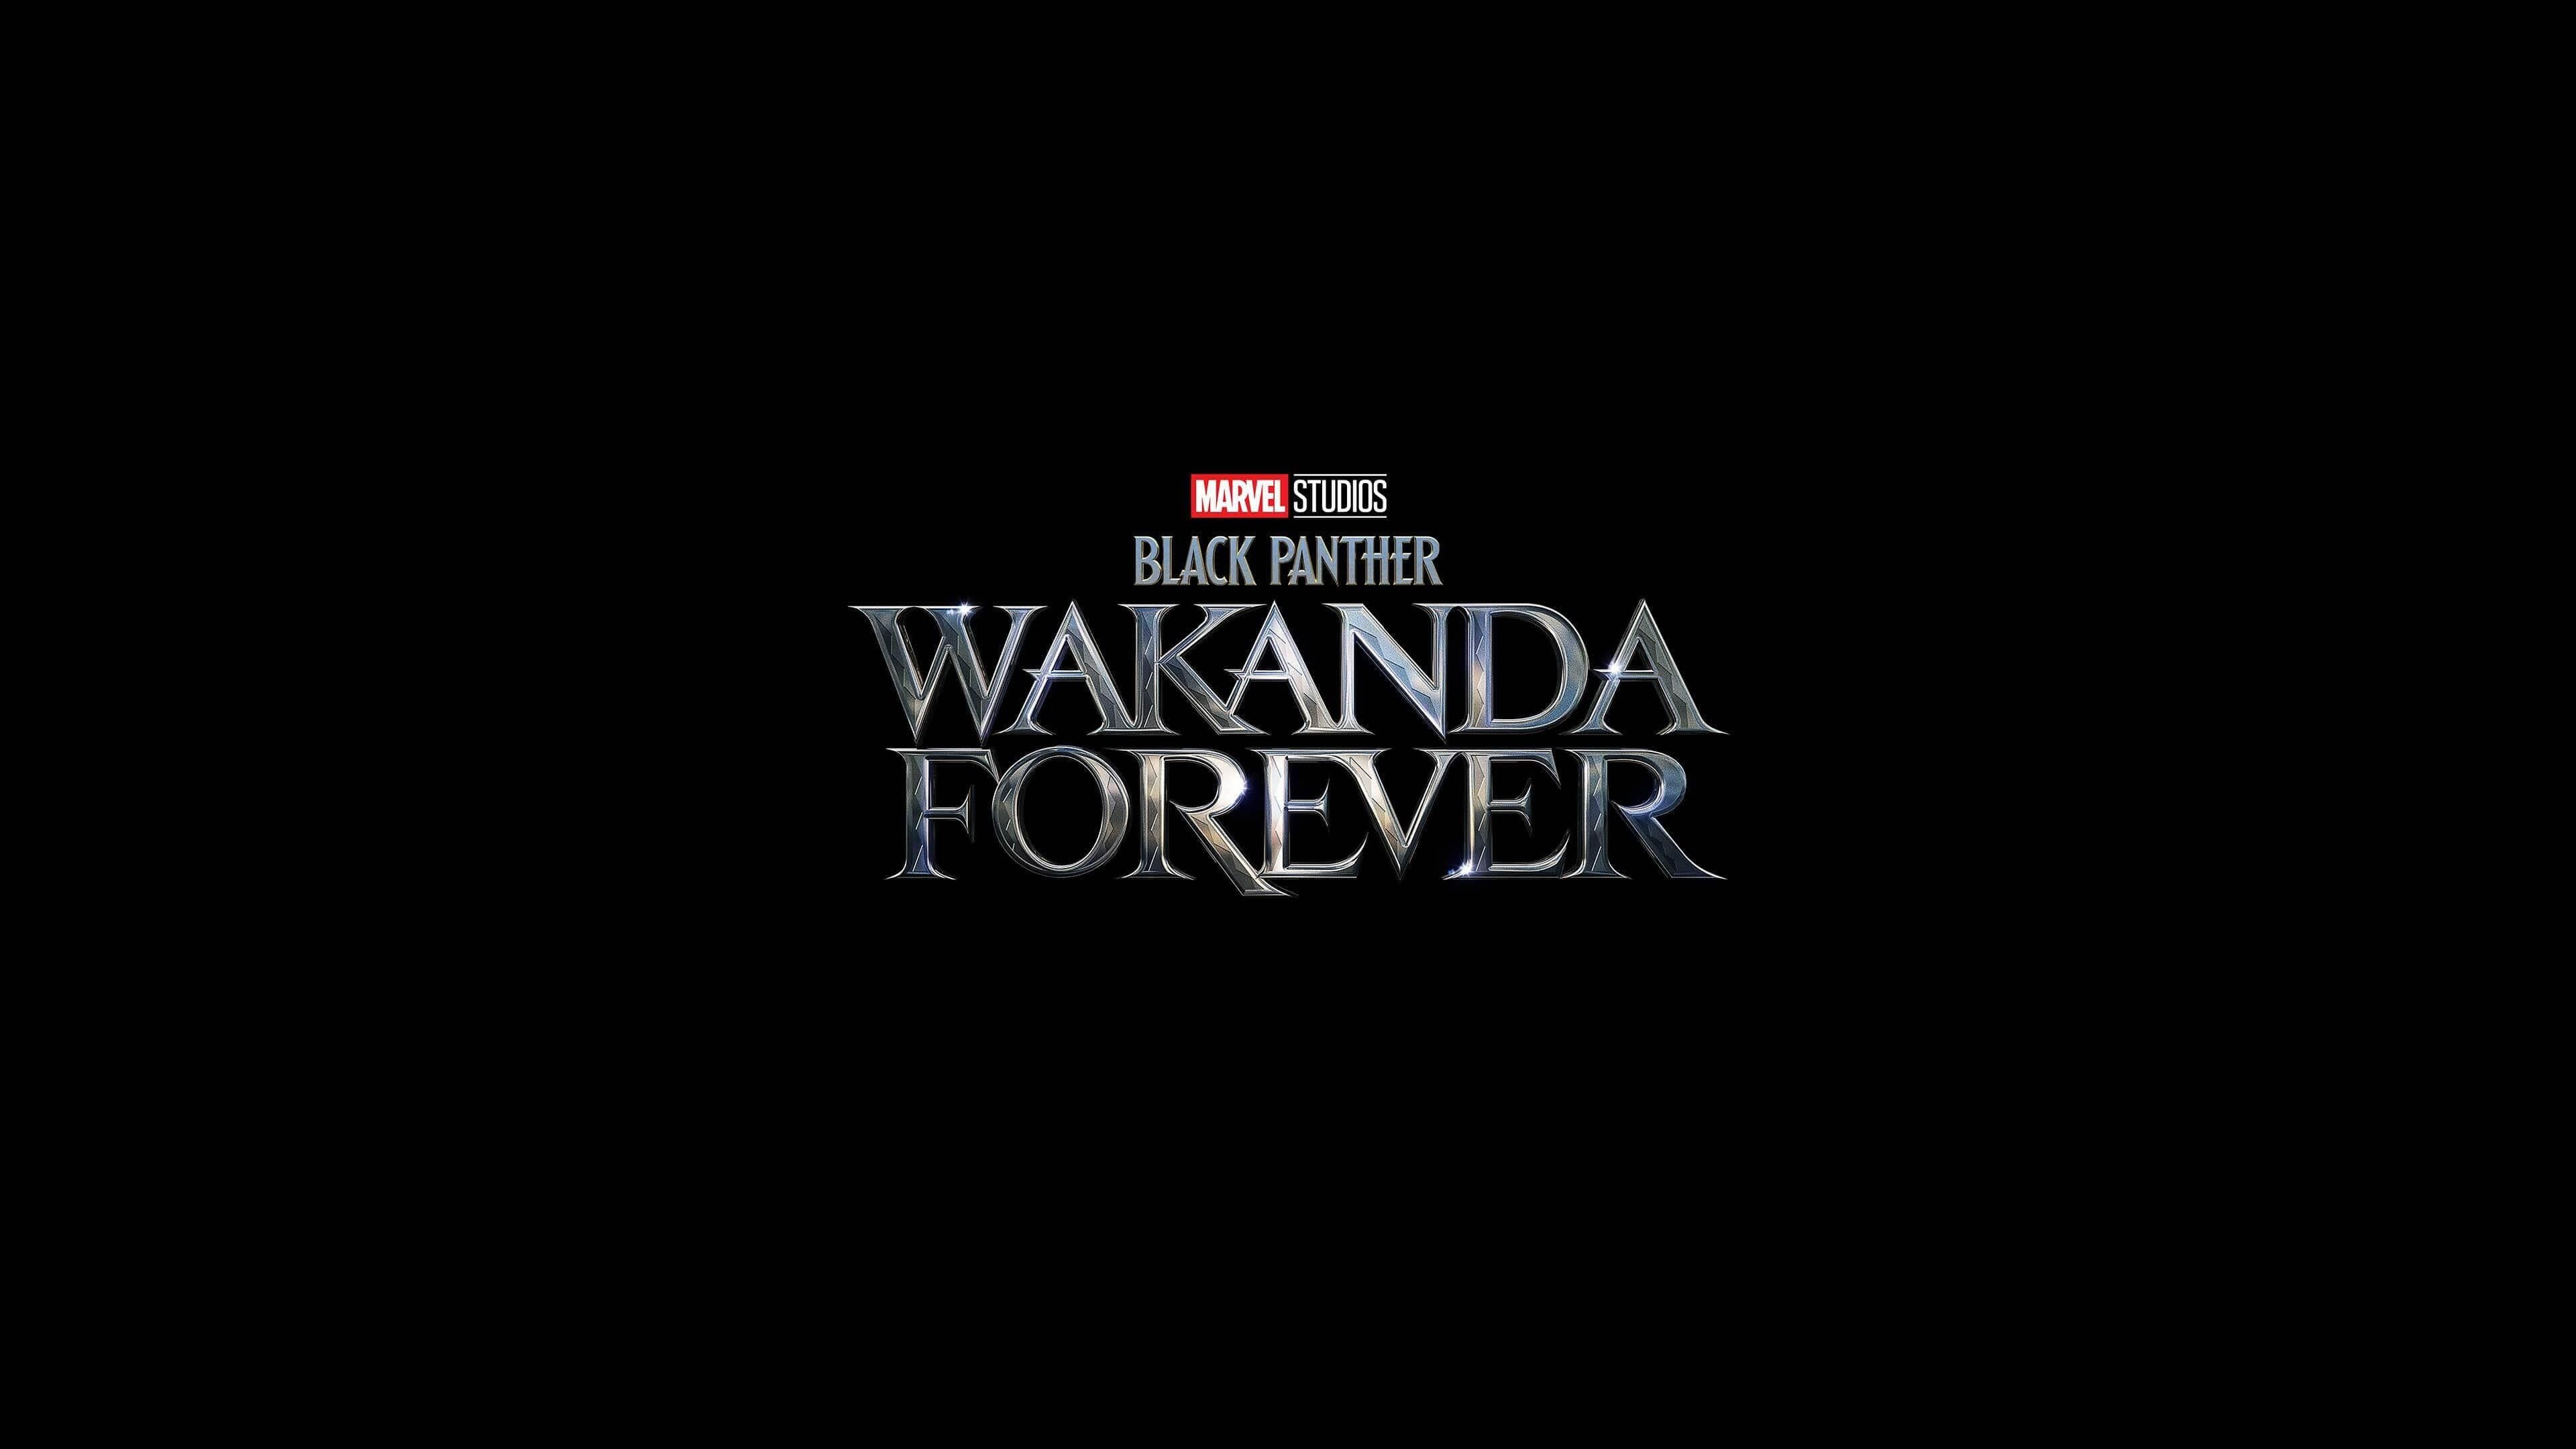 Pantera Negra: Wakanda por siempre